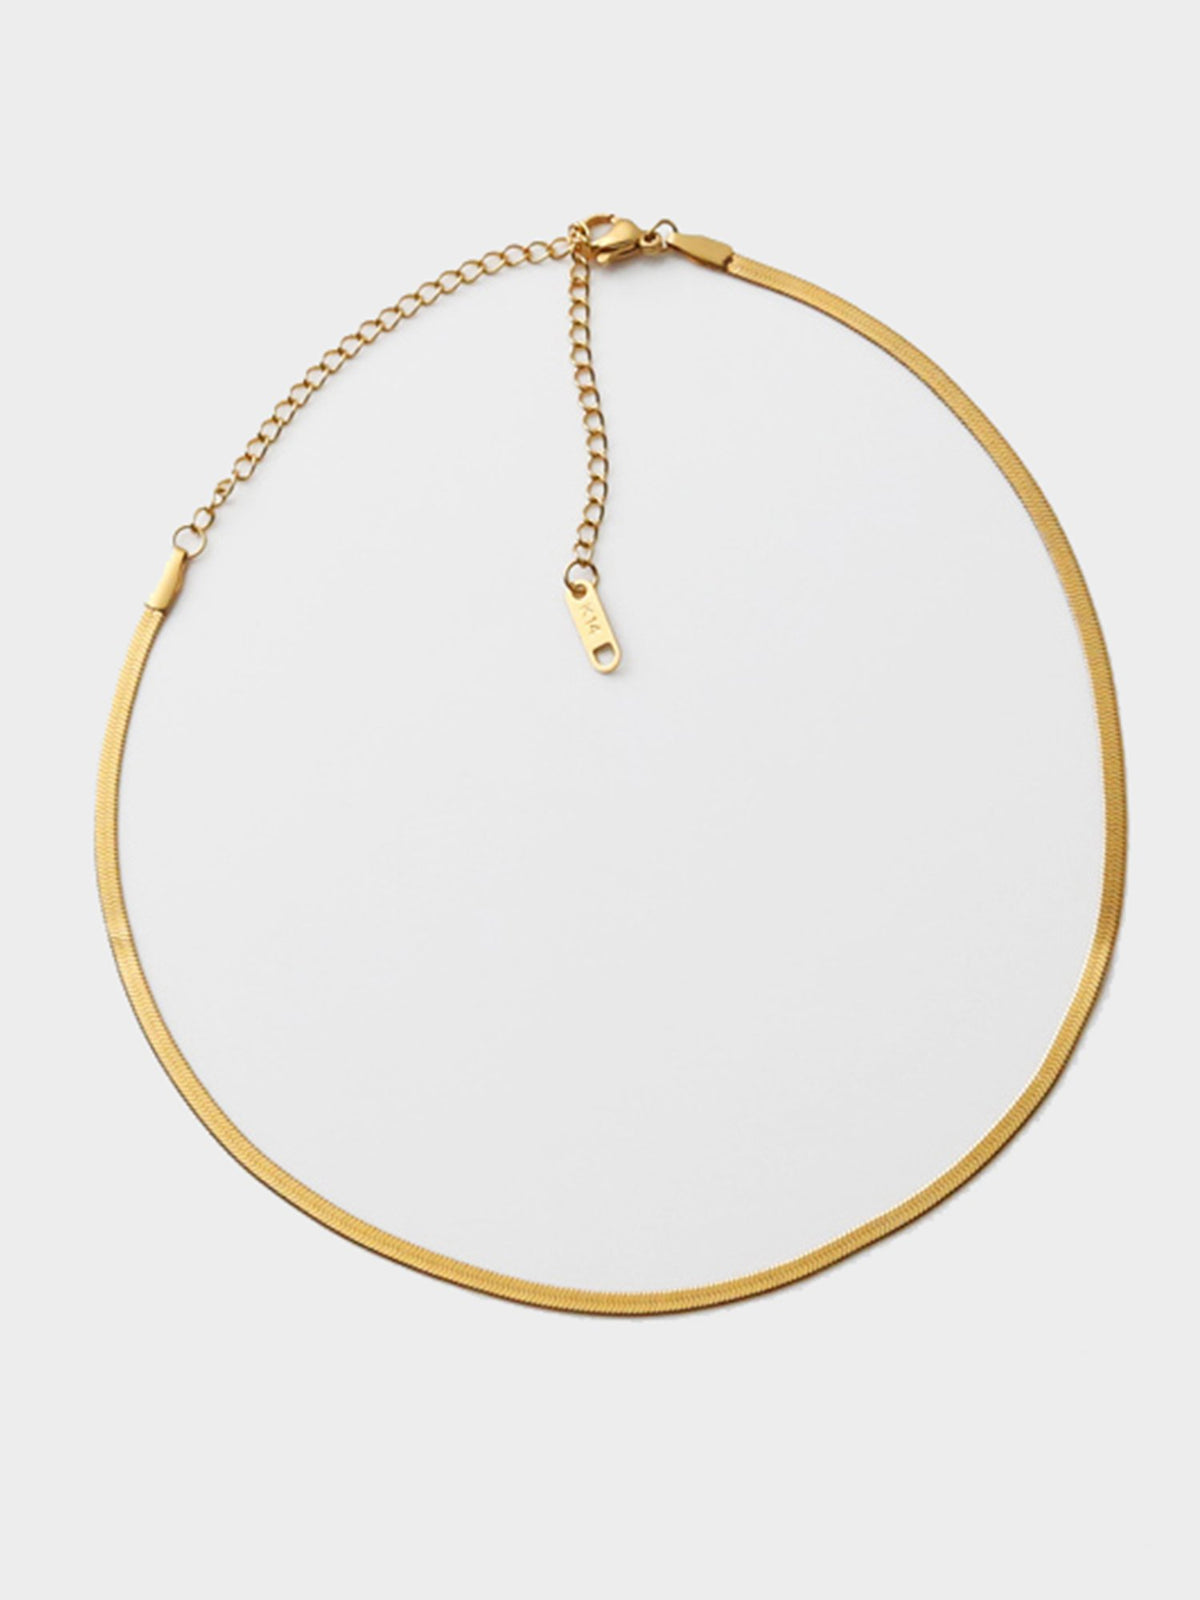 Vintage 14K Gold Snake Bone Necklace - worthtryit.com